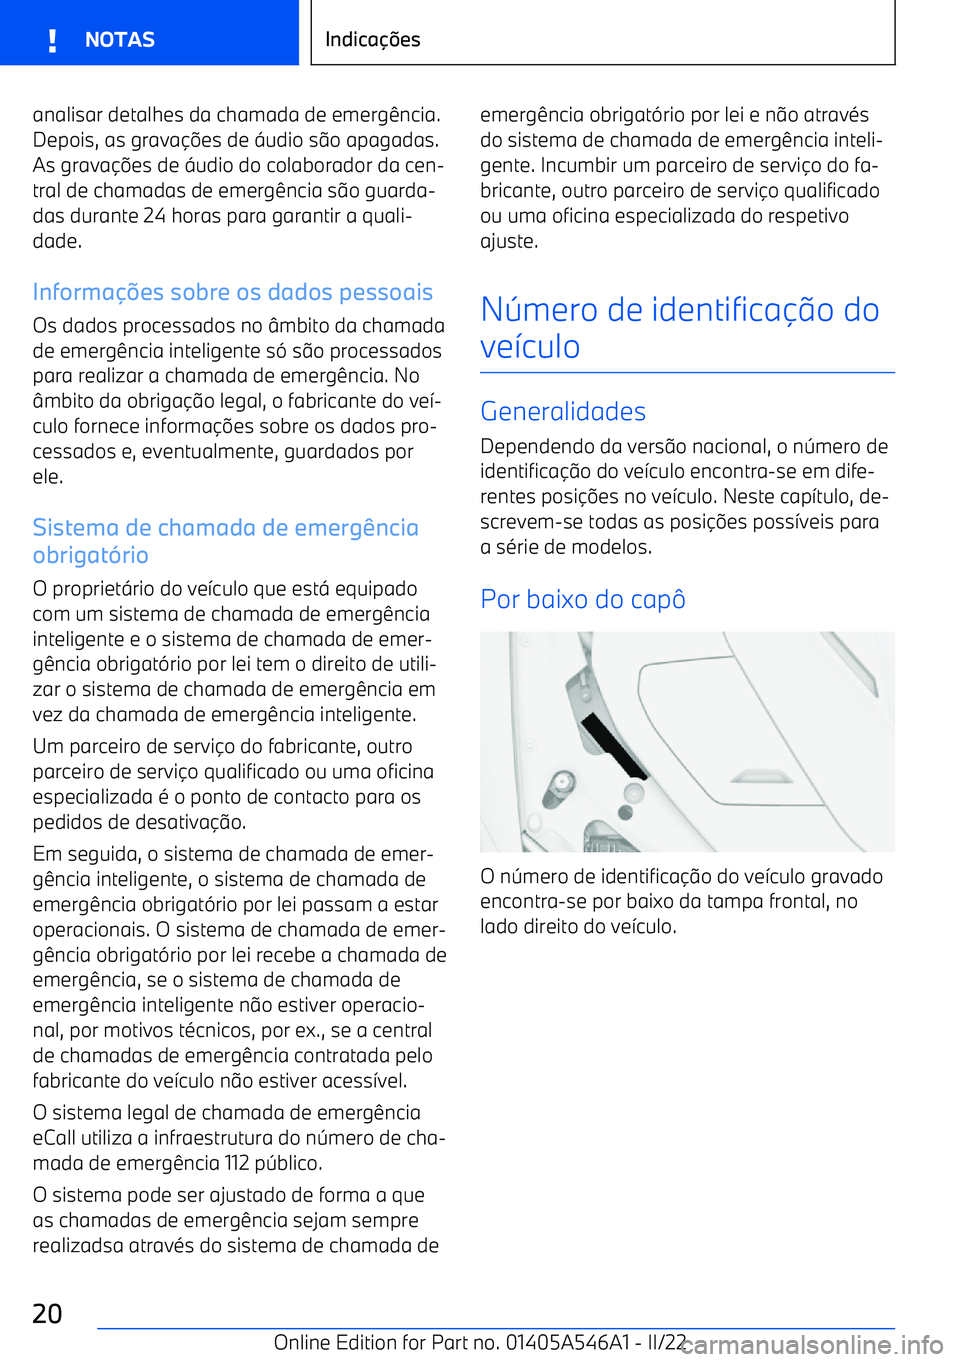 BMW I4 2022  Manual do condutor (in Portuguese) analisar detalhes da chamada de emerg